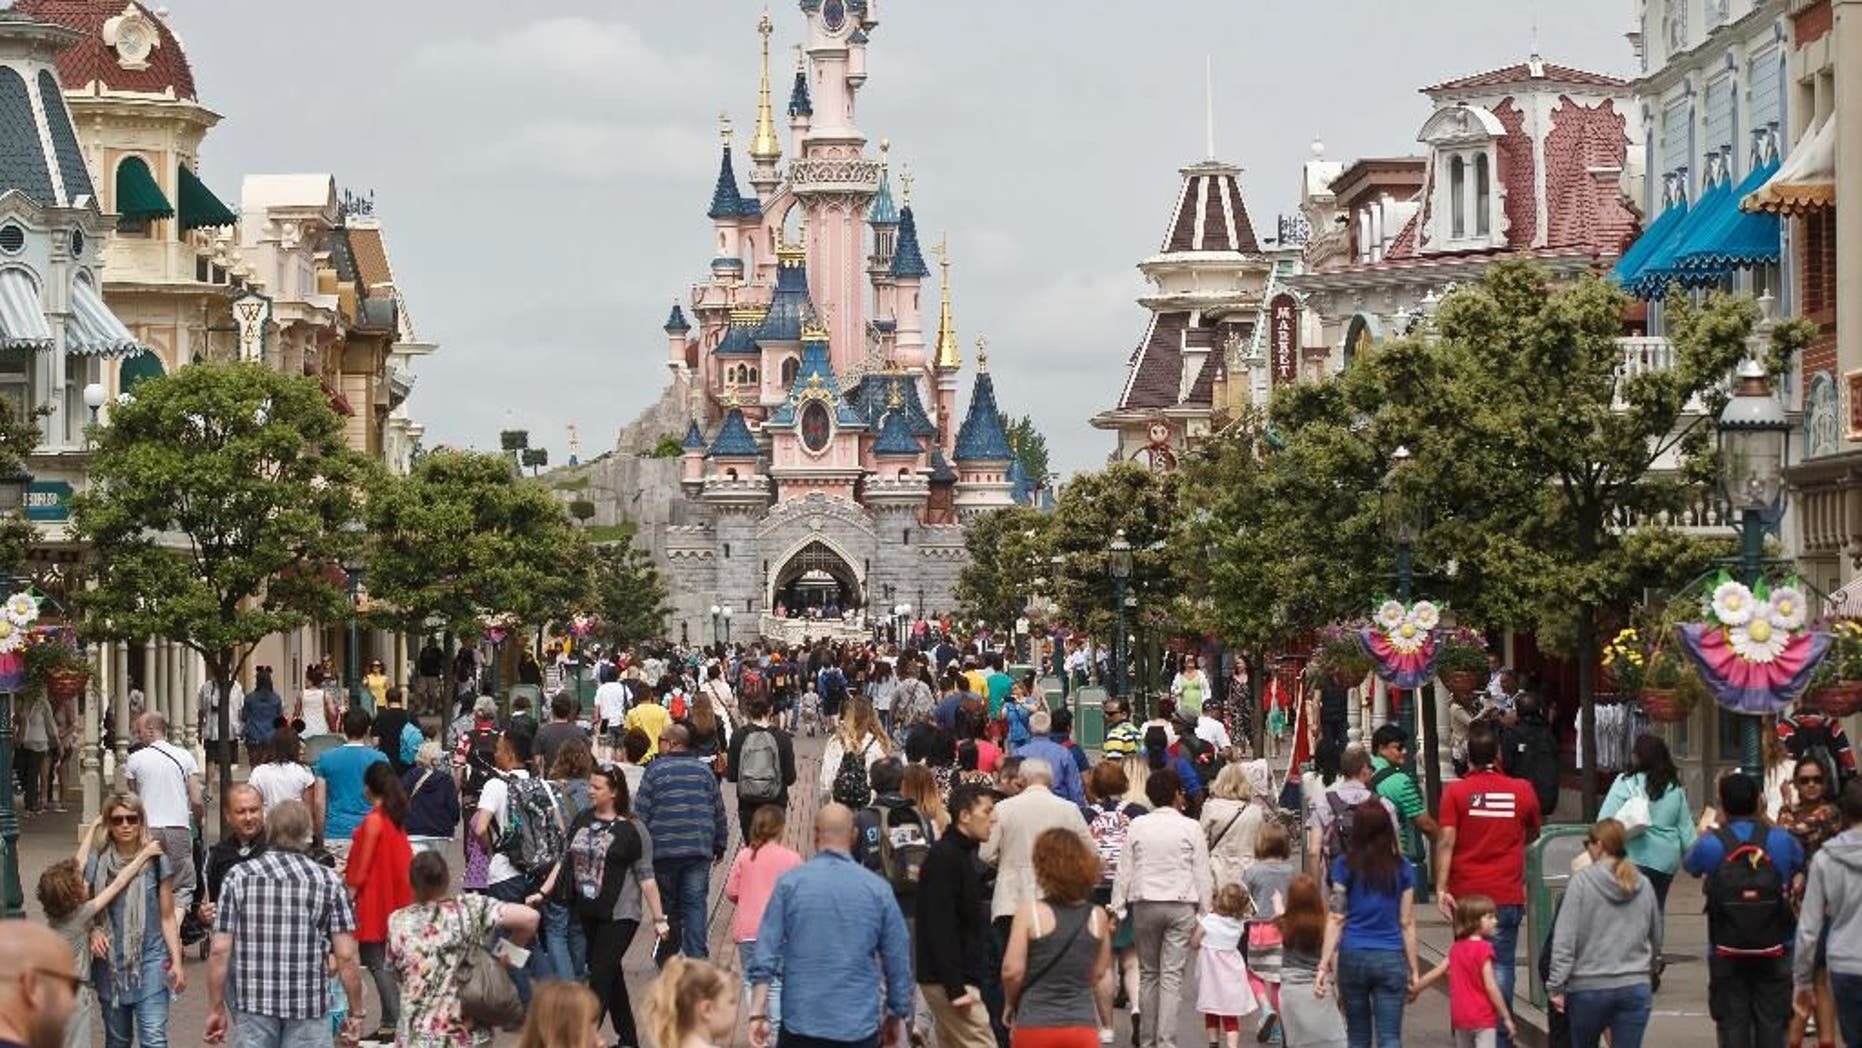 Disneyland Paris to host official LGBTQ Pride celebration, a first for Disney parks